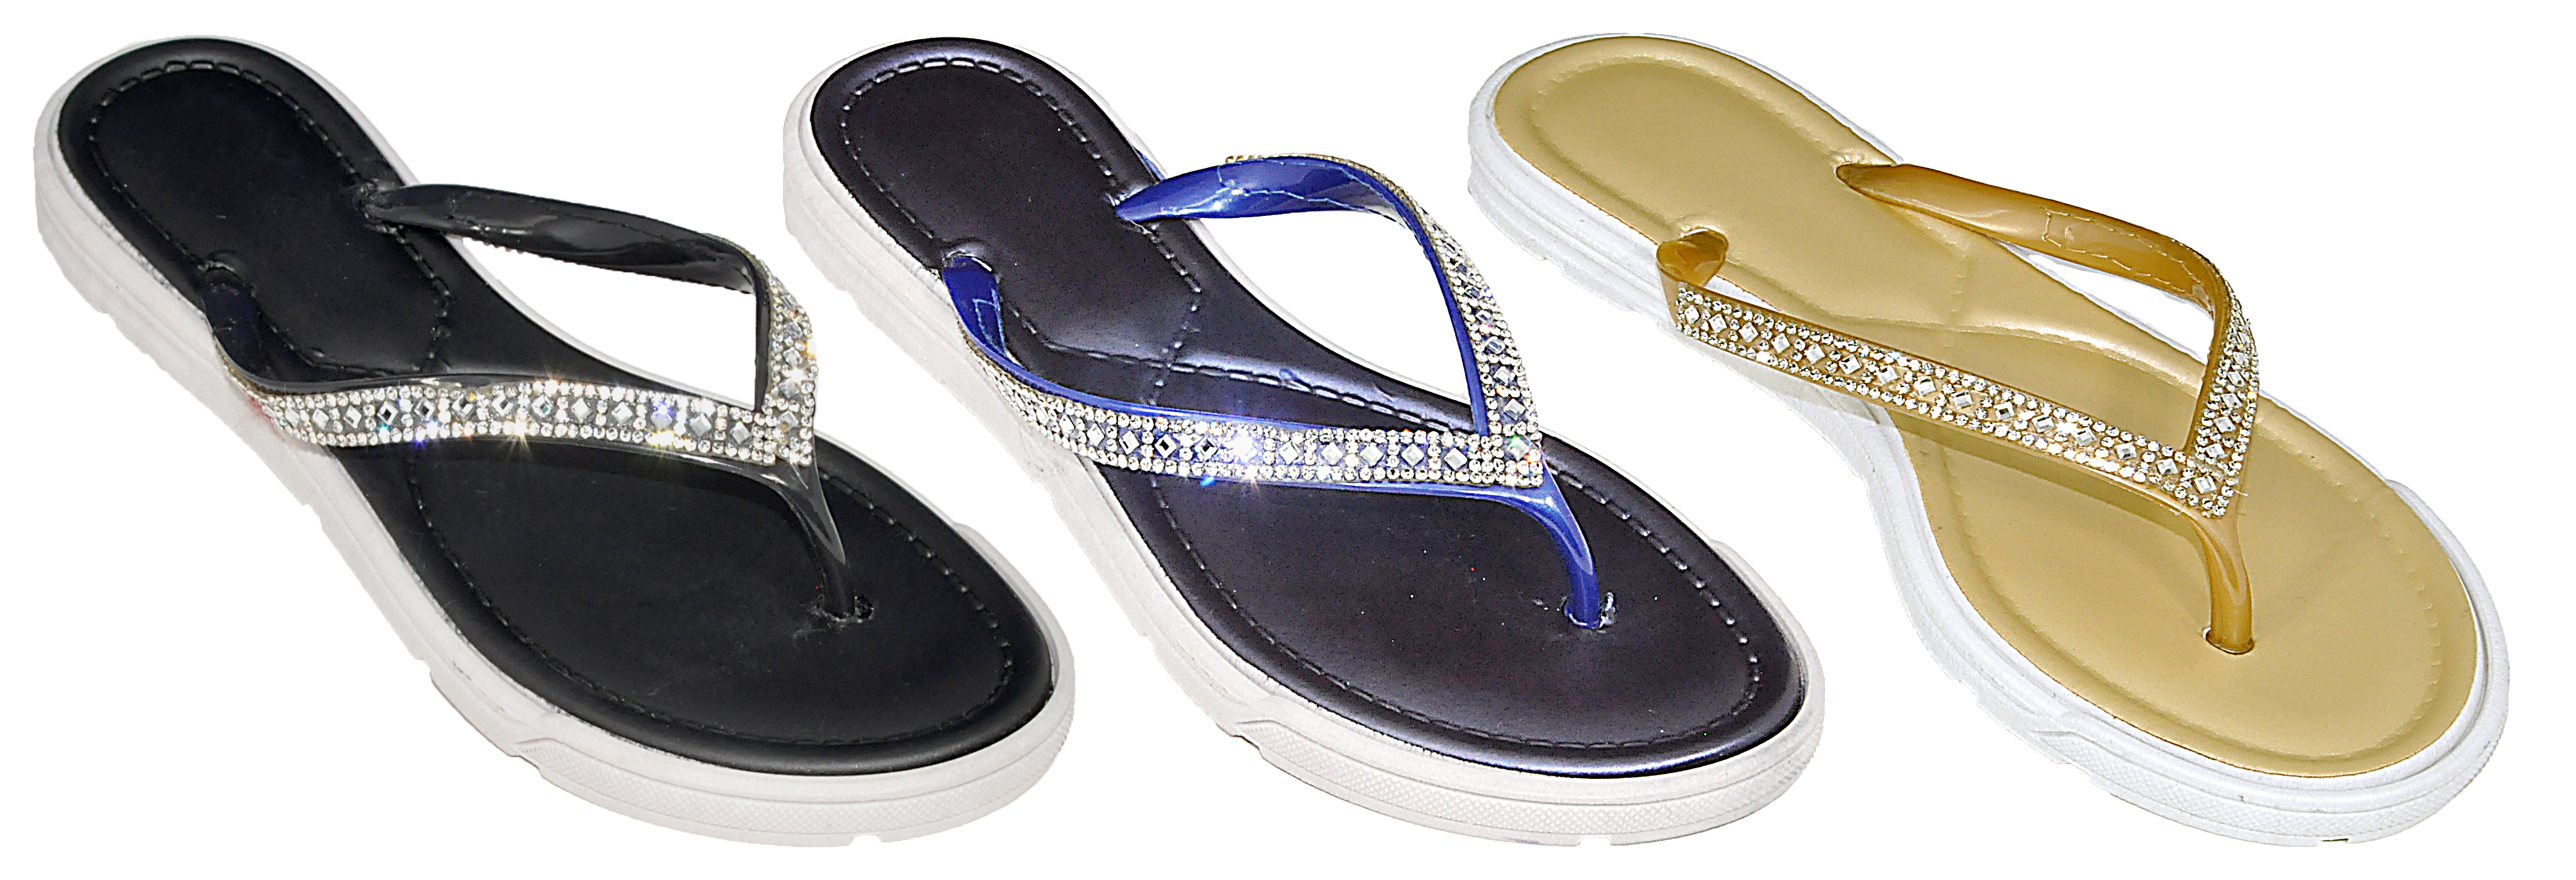 Women's Mini Wedge Gizeh Slide SANDALS w/ Soft Stitched Footfoot & Rhinestone Embellishment